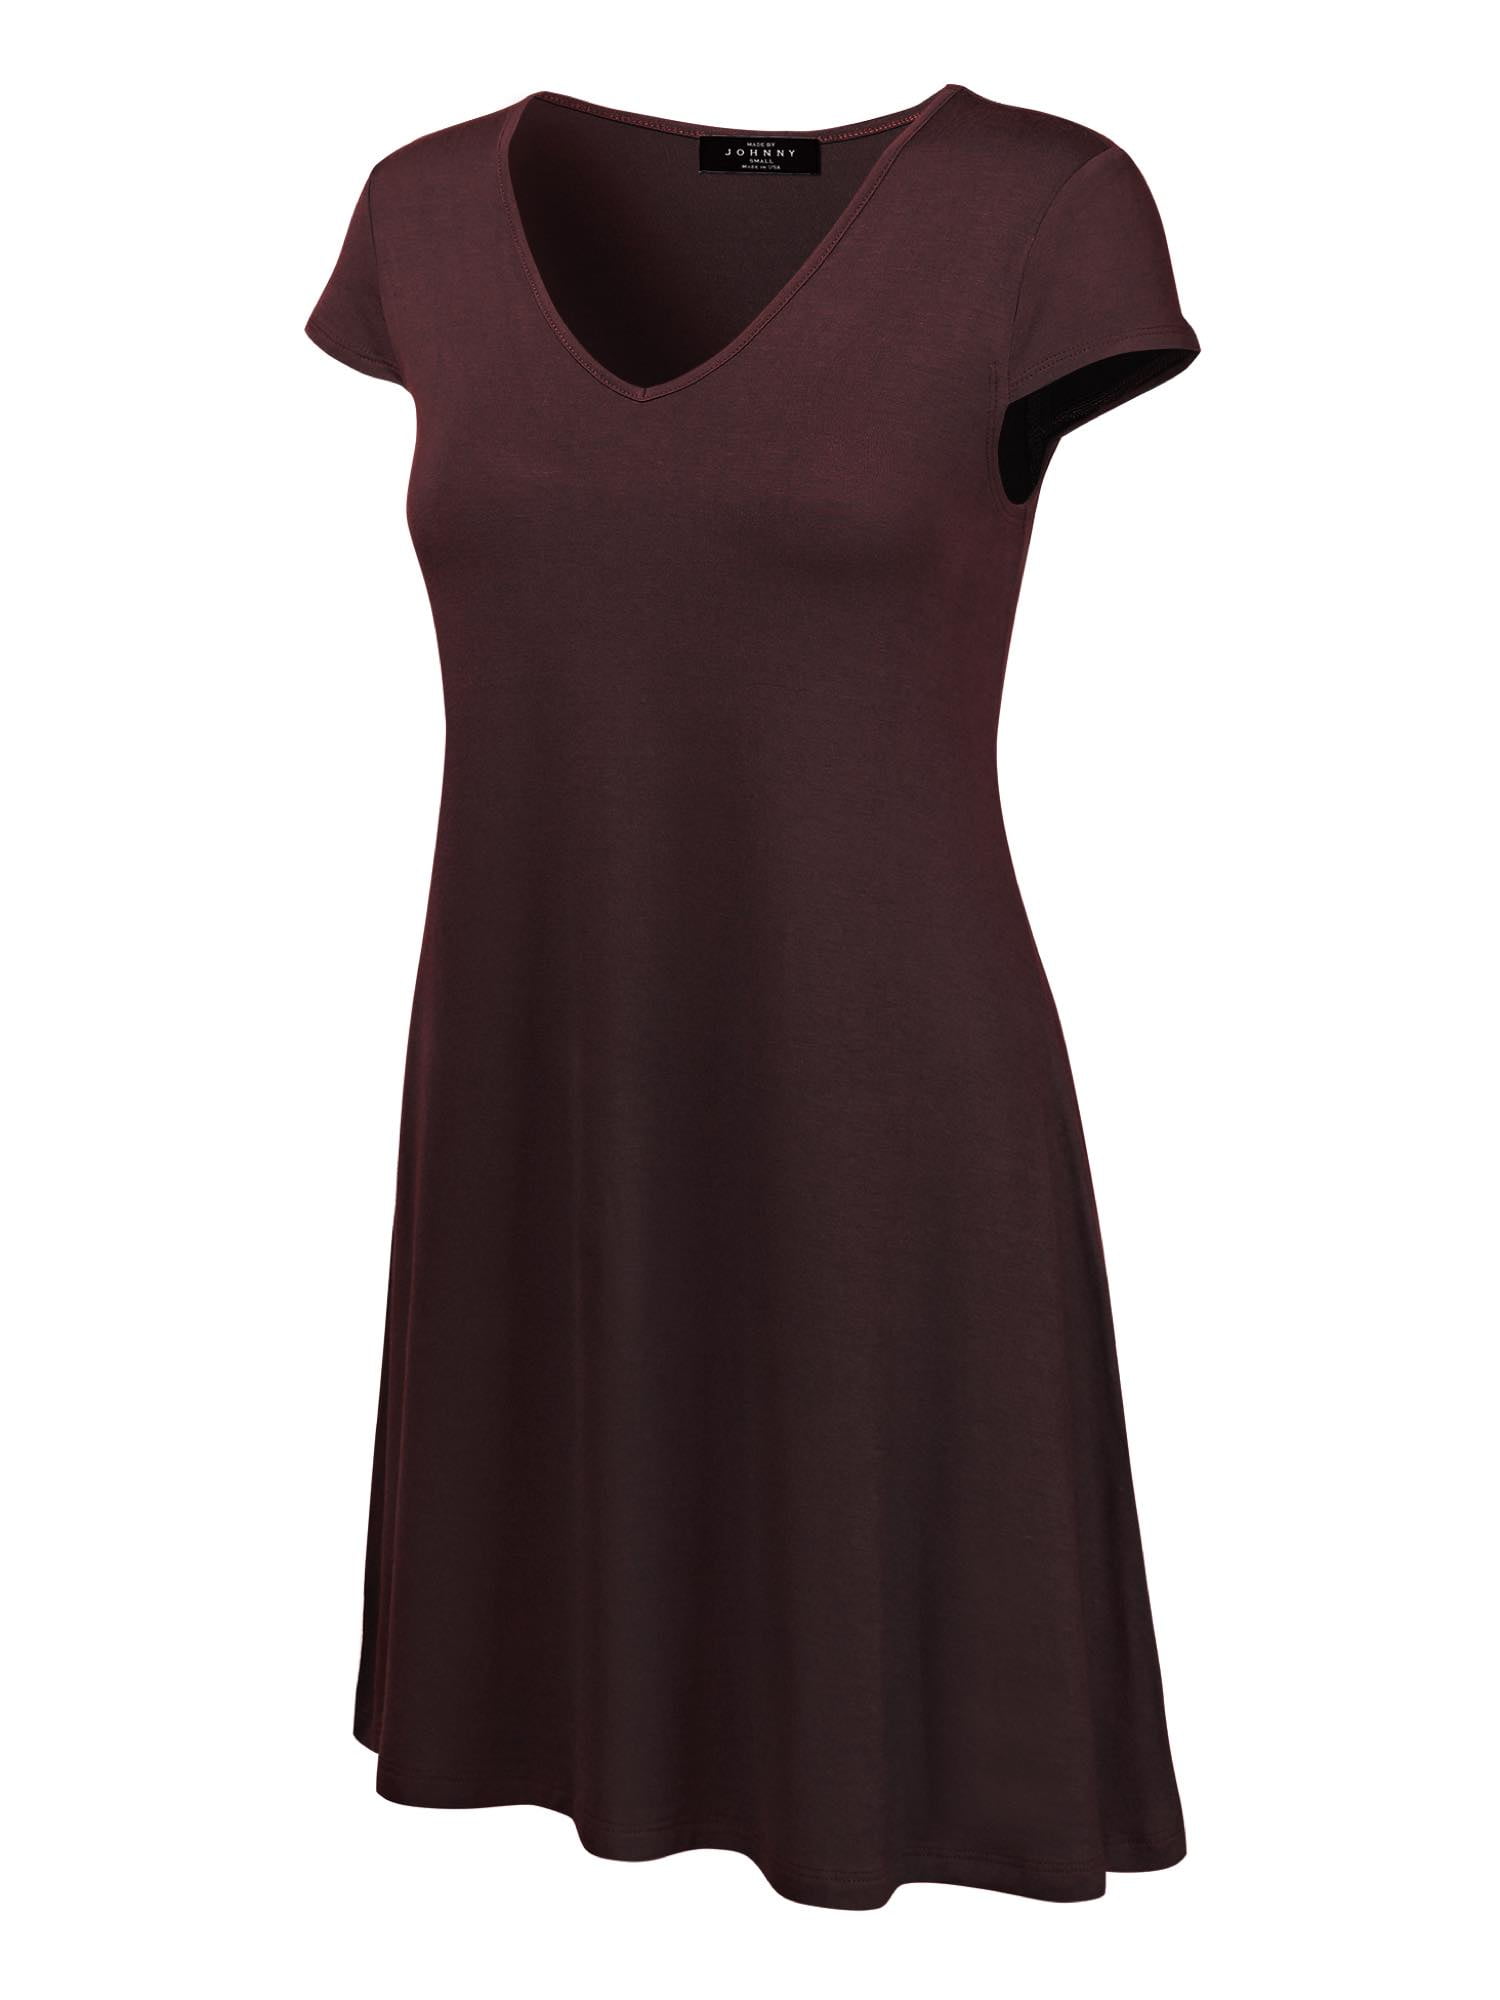 MBJ WDR1068 Womens V Neck Cap Sleeve T Shirt Dress M BROWN - Walmart.com